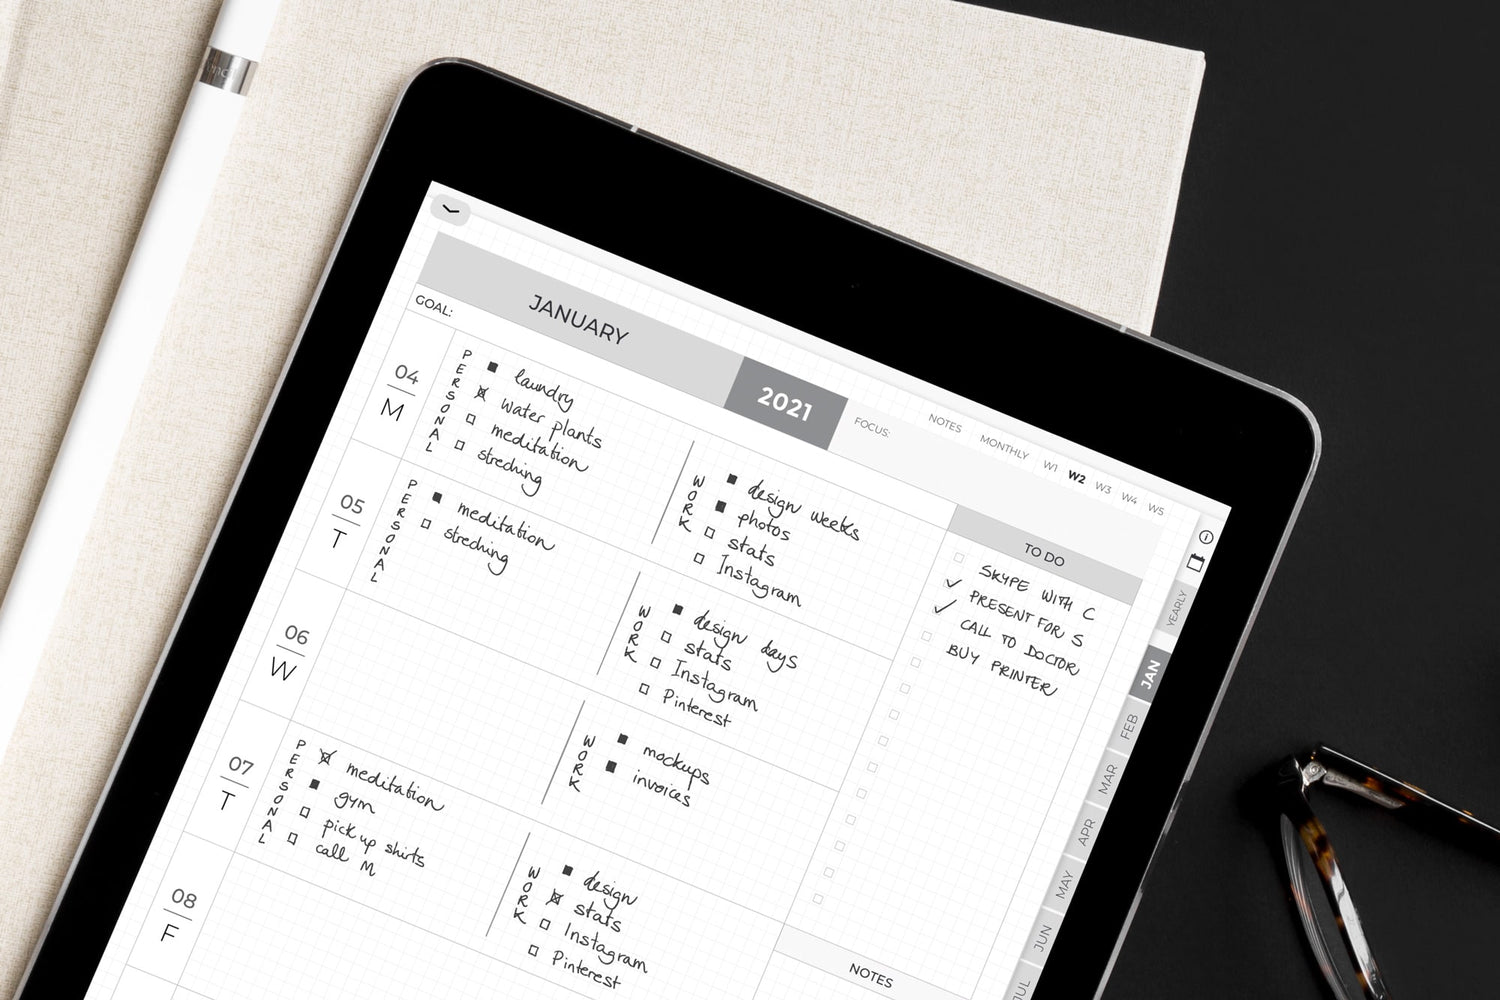 Minimalist digital weekly planner page on an iPad